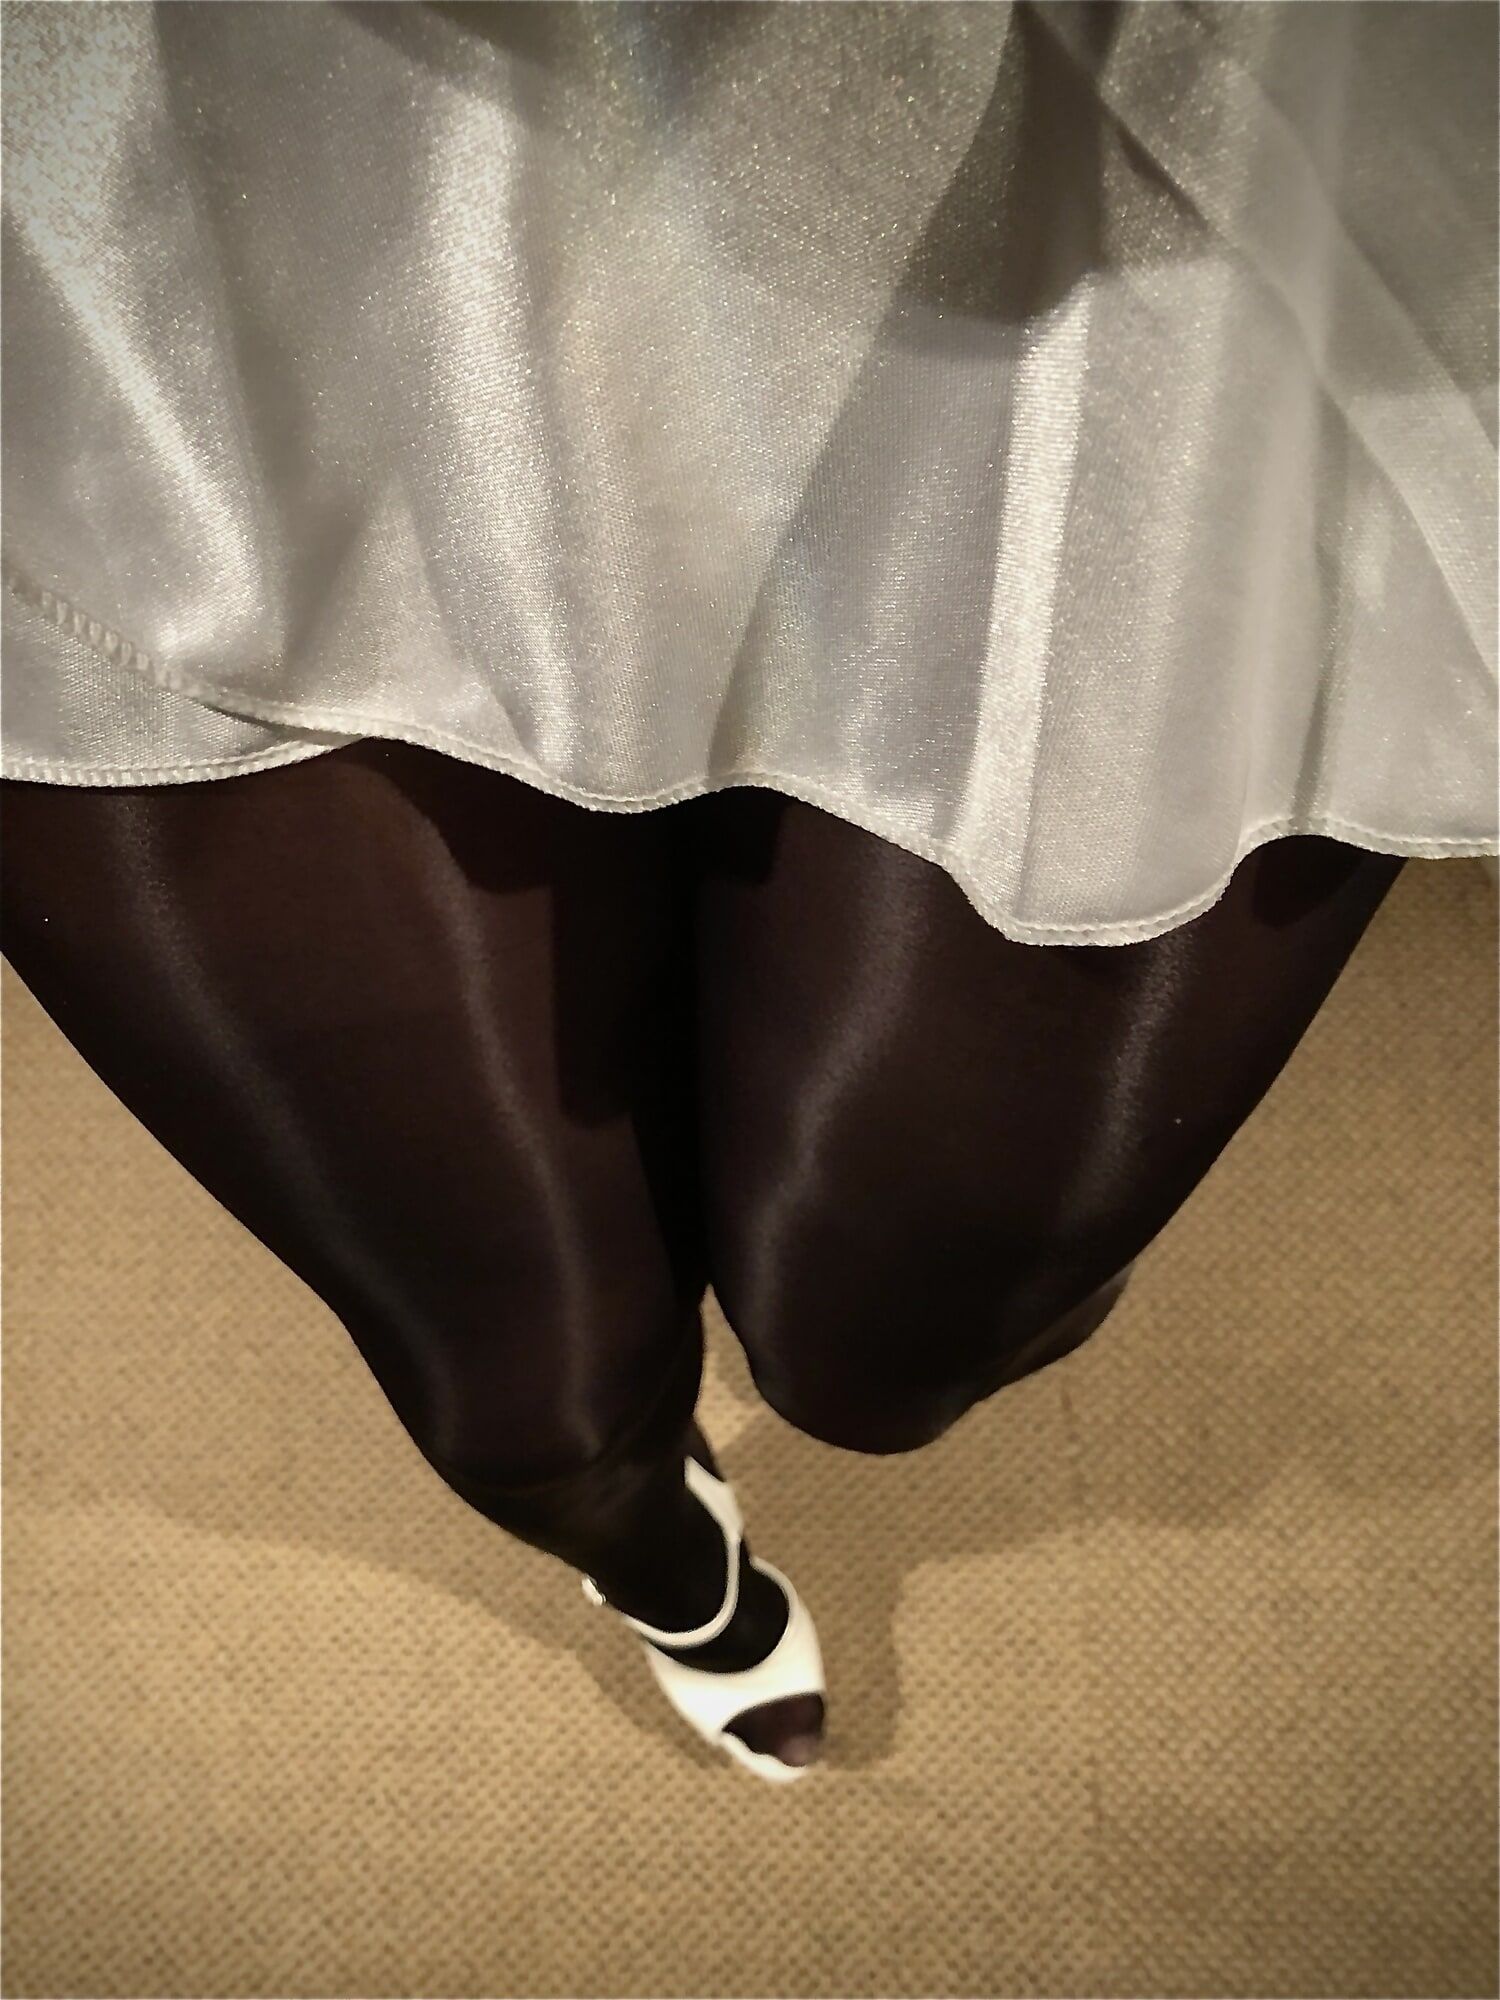 My shiny sheer glossy black pantyhose and white super heels